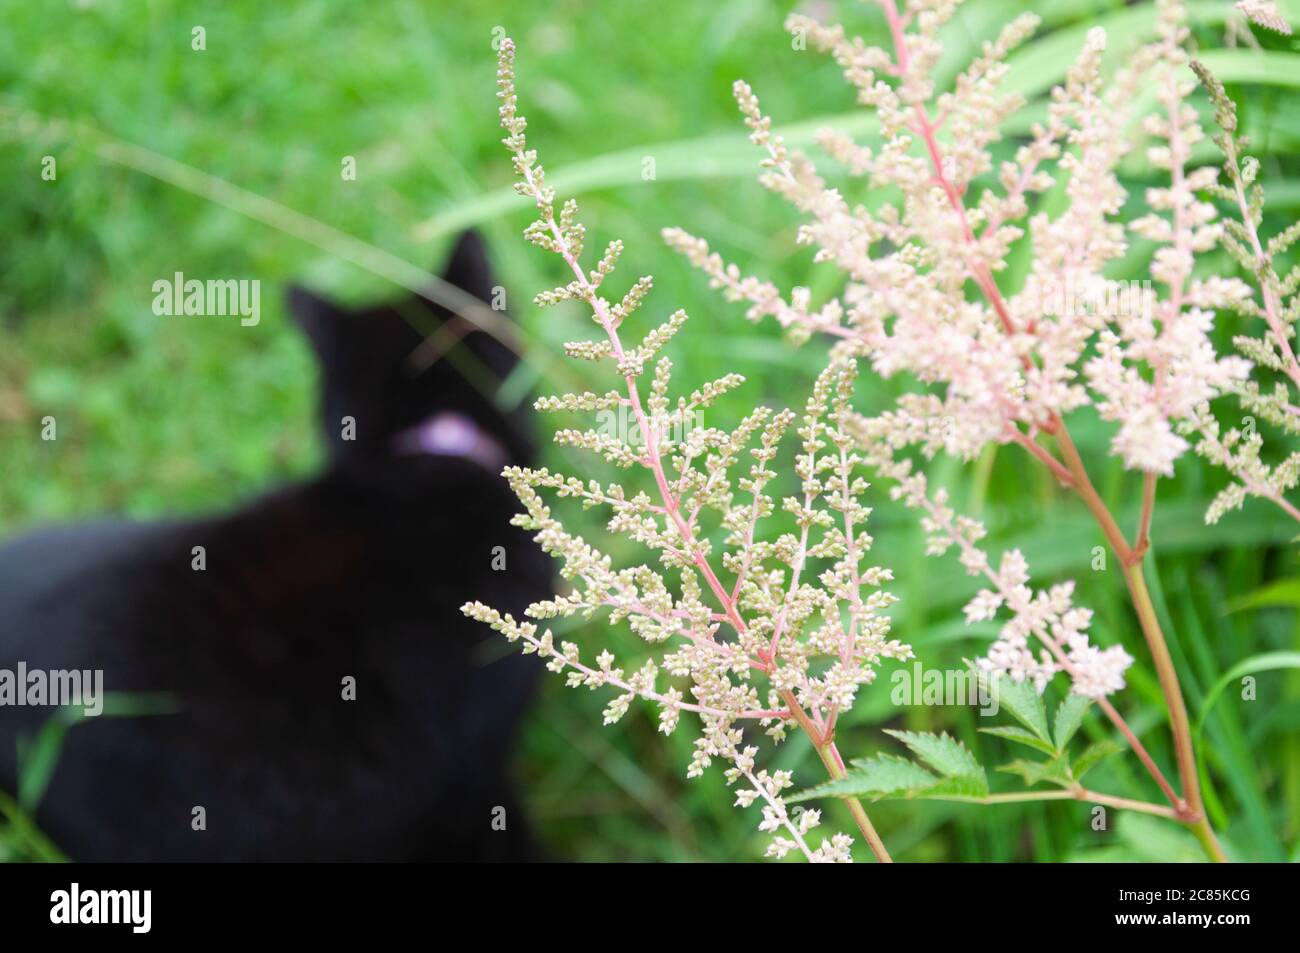 pink astilbe flower in garden on background unfocused silhouette of black cat Stock Photo